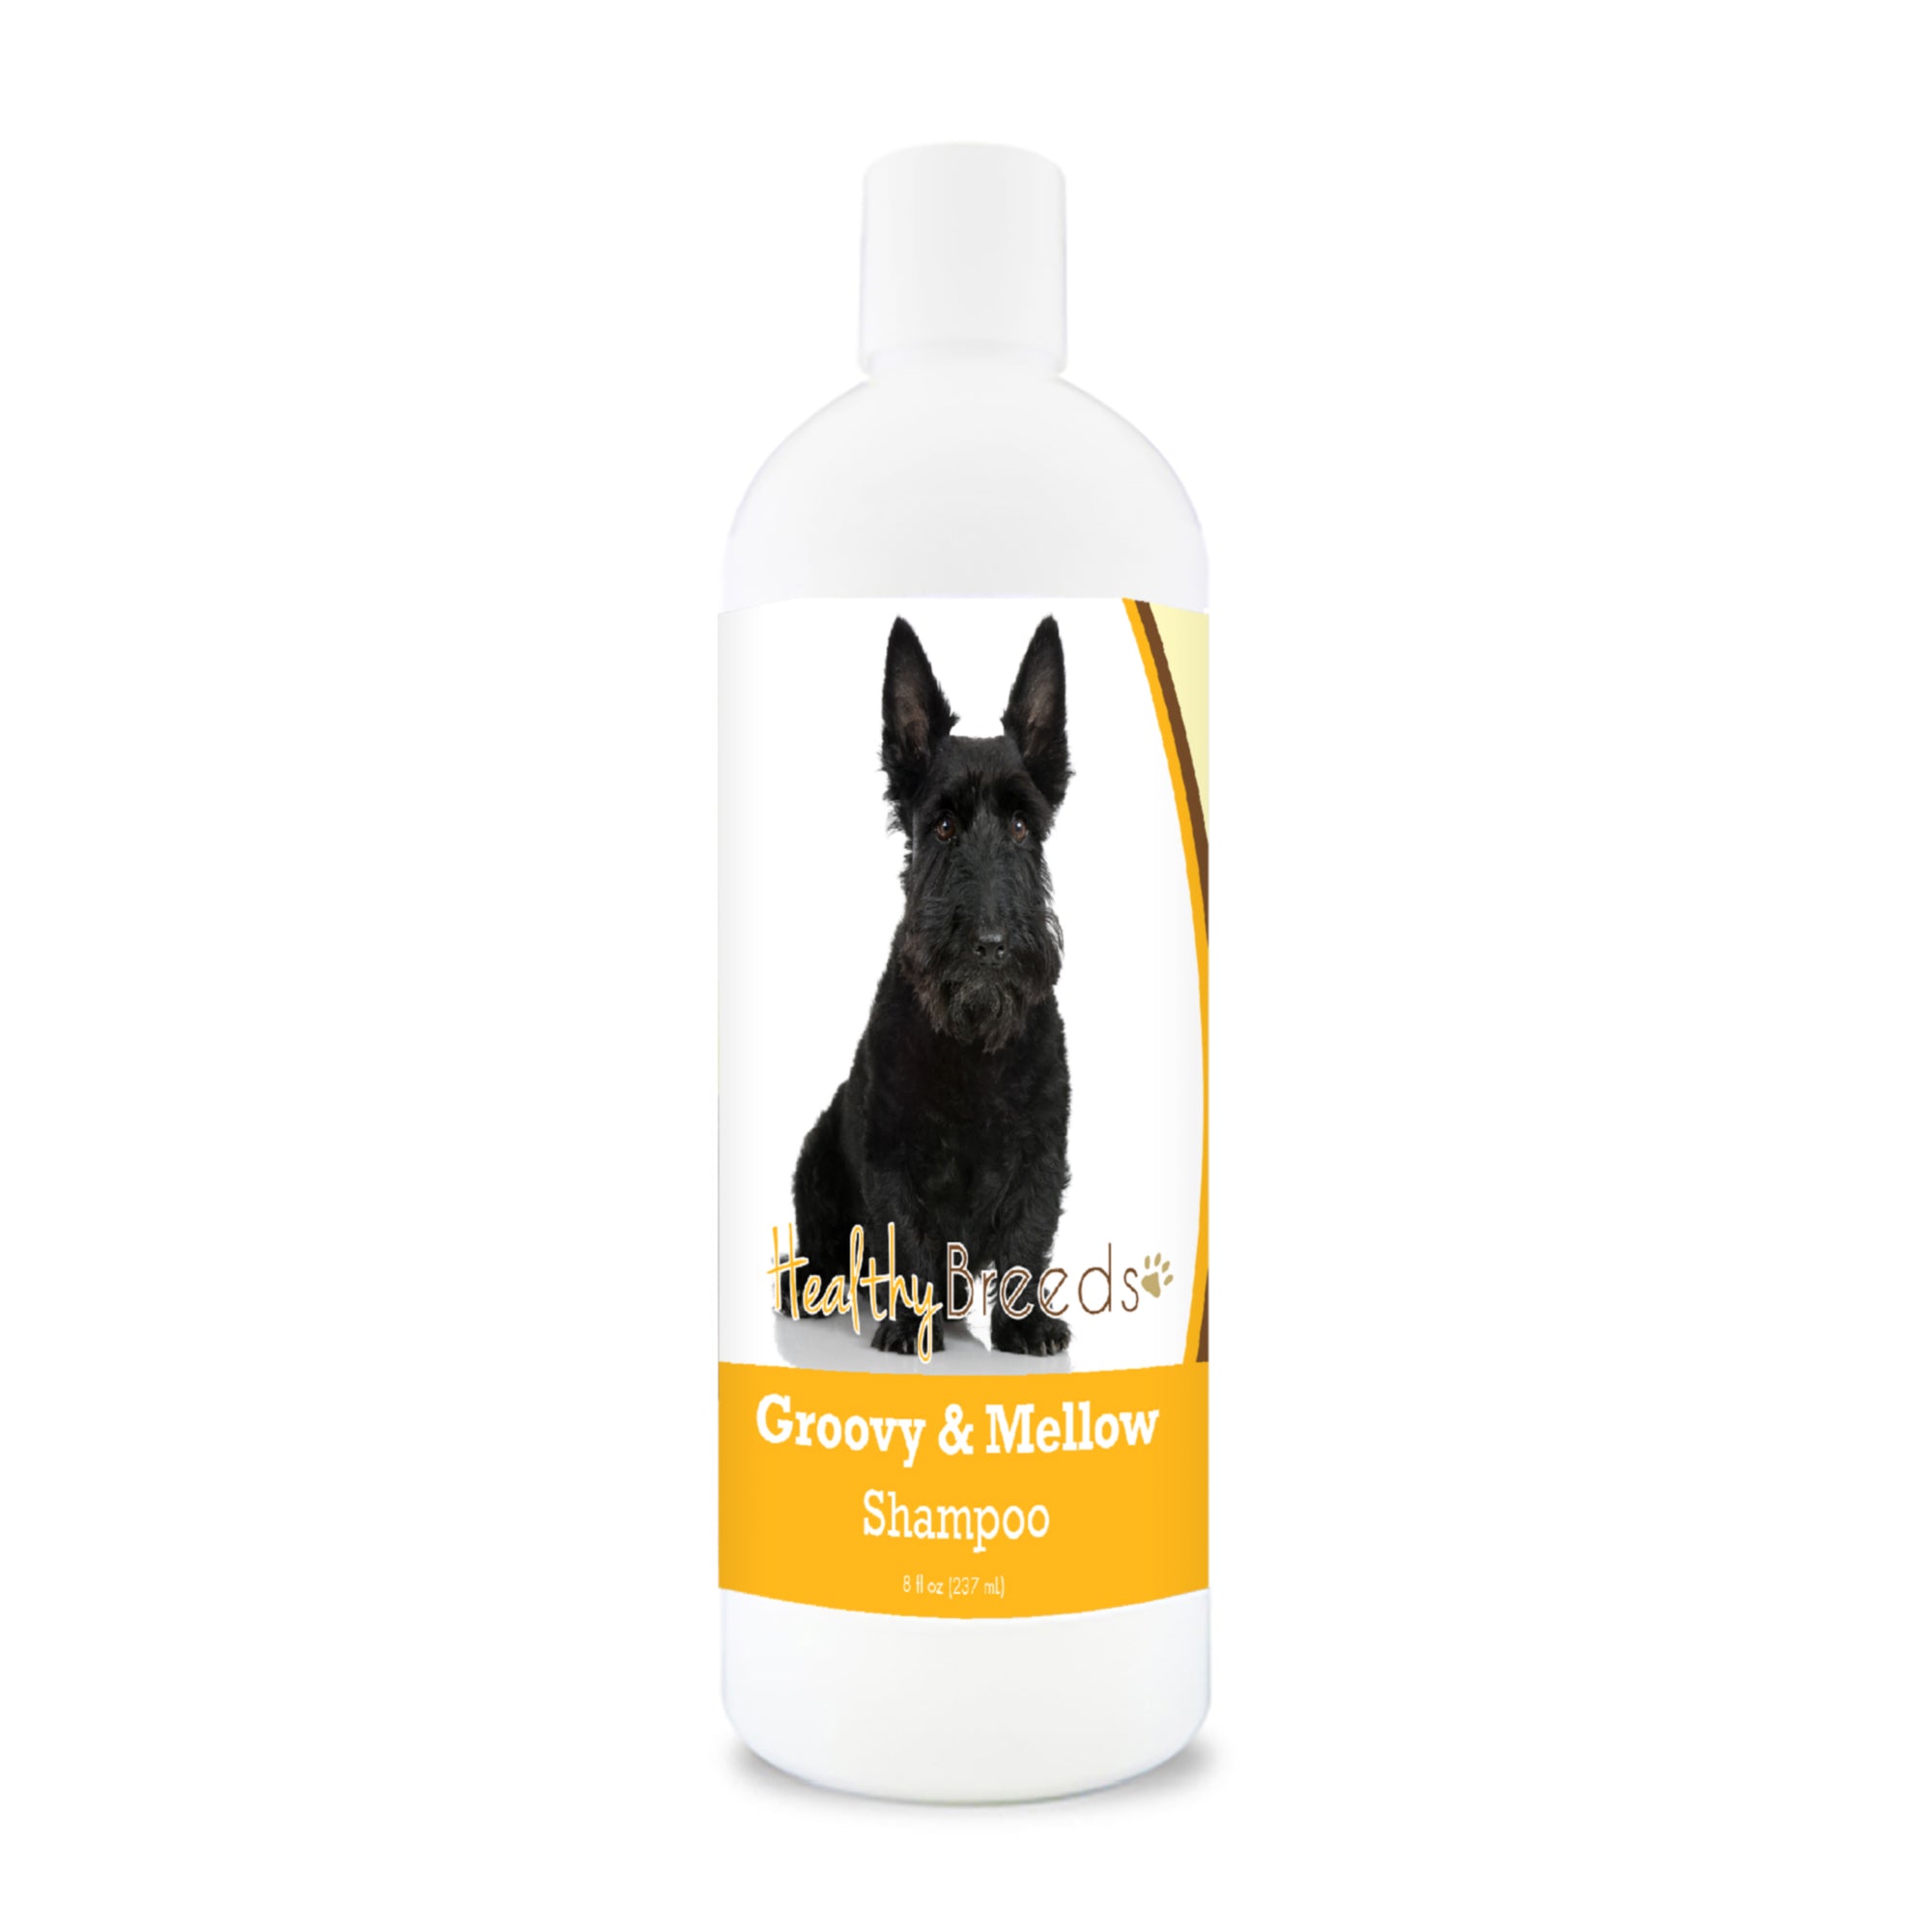 Scottish Terrier Groovy & Mellow Shampoo 8 oz